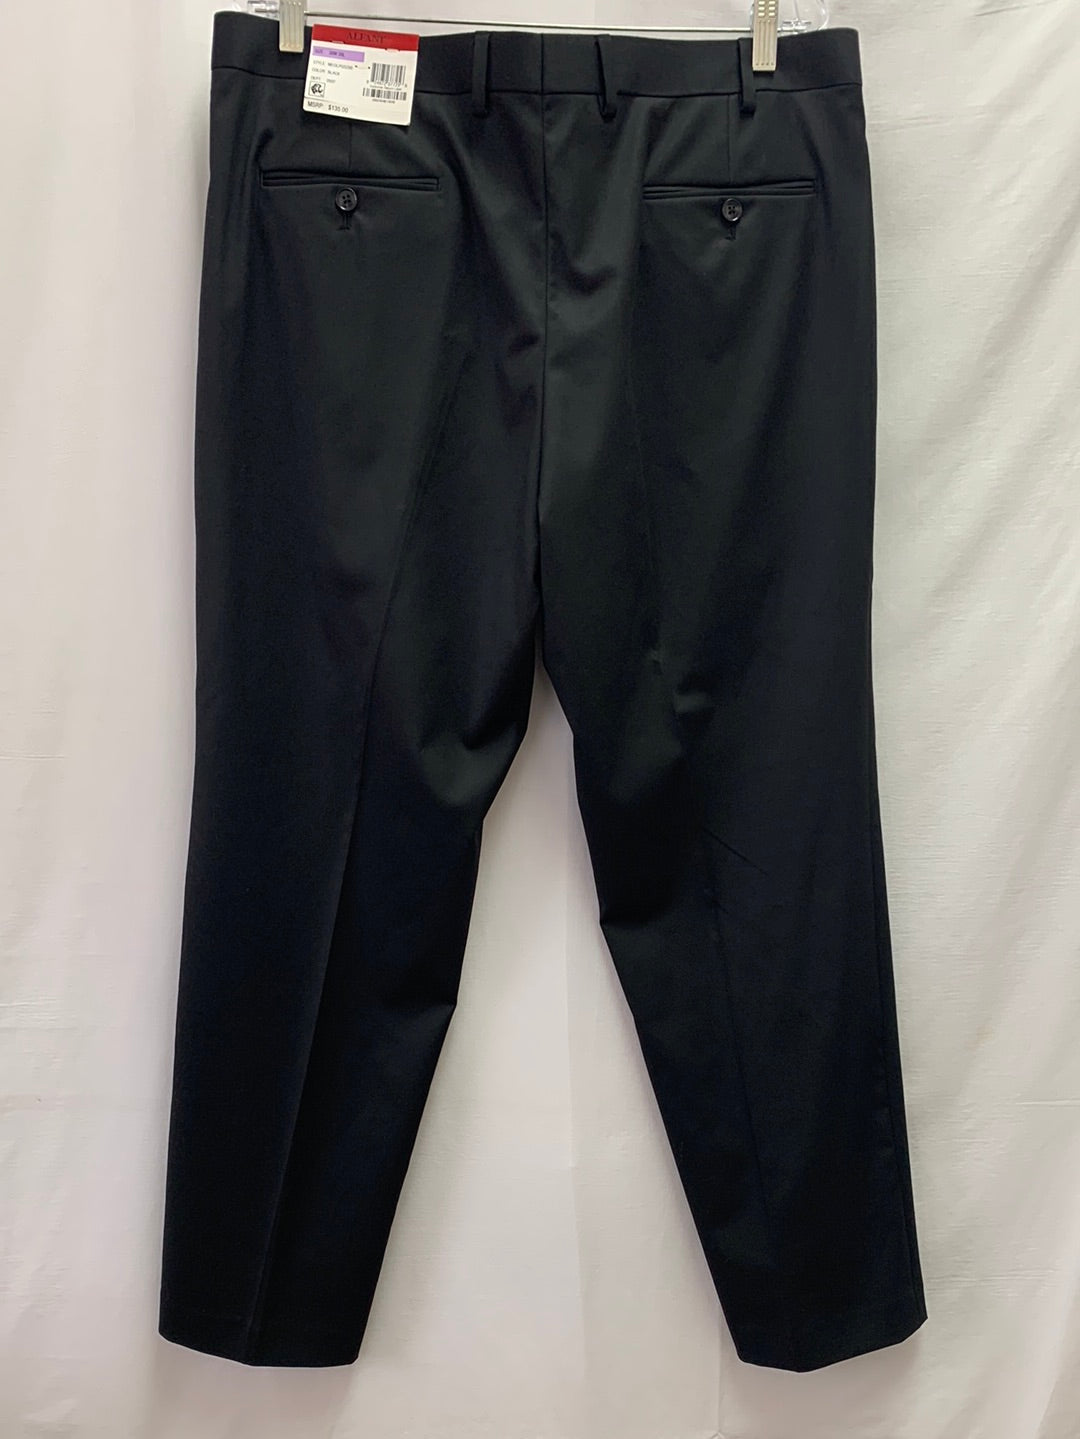 NWT - ALFANI black Slim Fit Stretch Wrinkle Recovery Dress Pants - 38 x 30